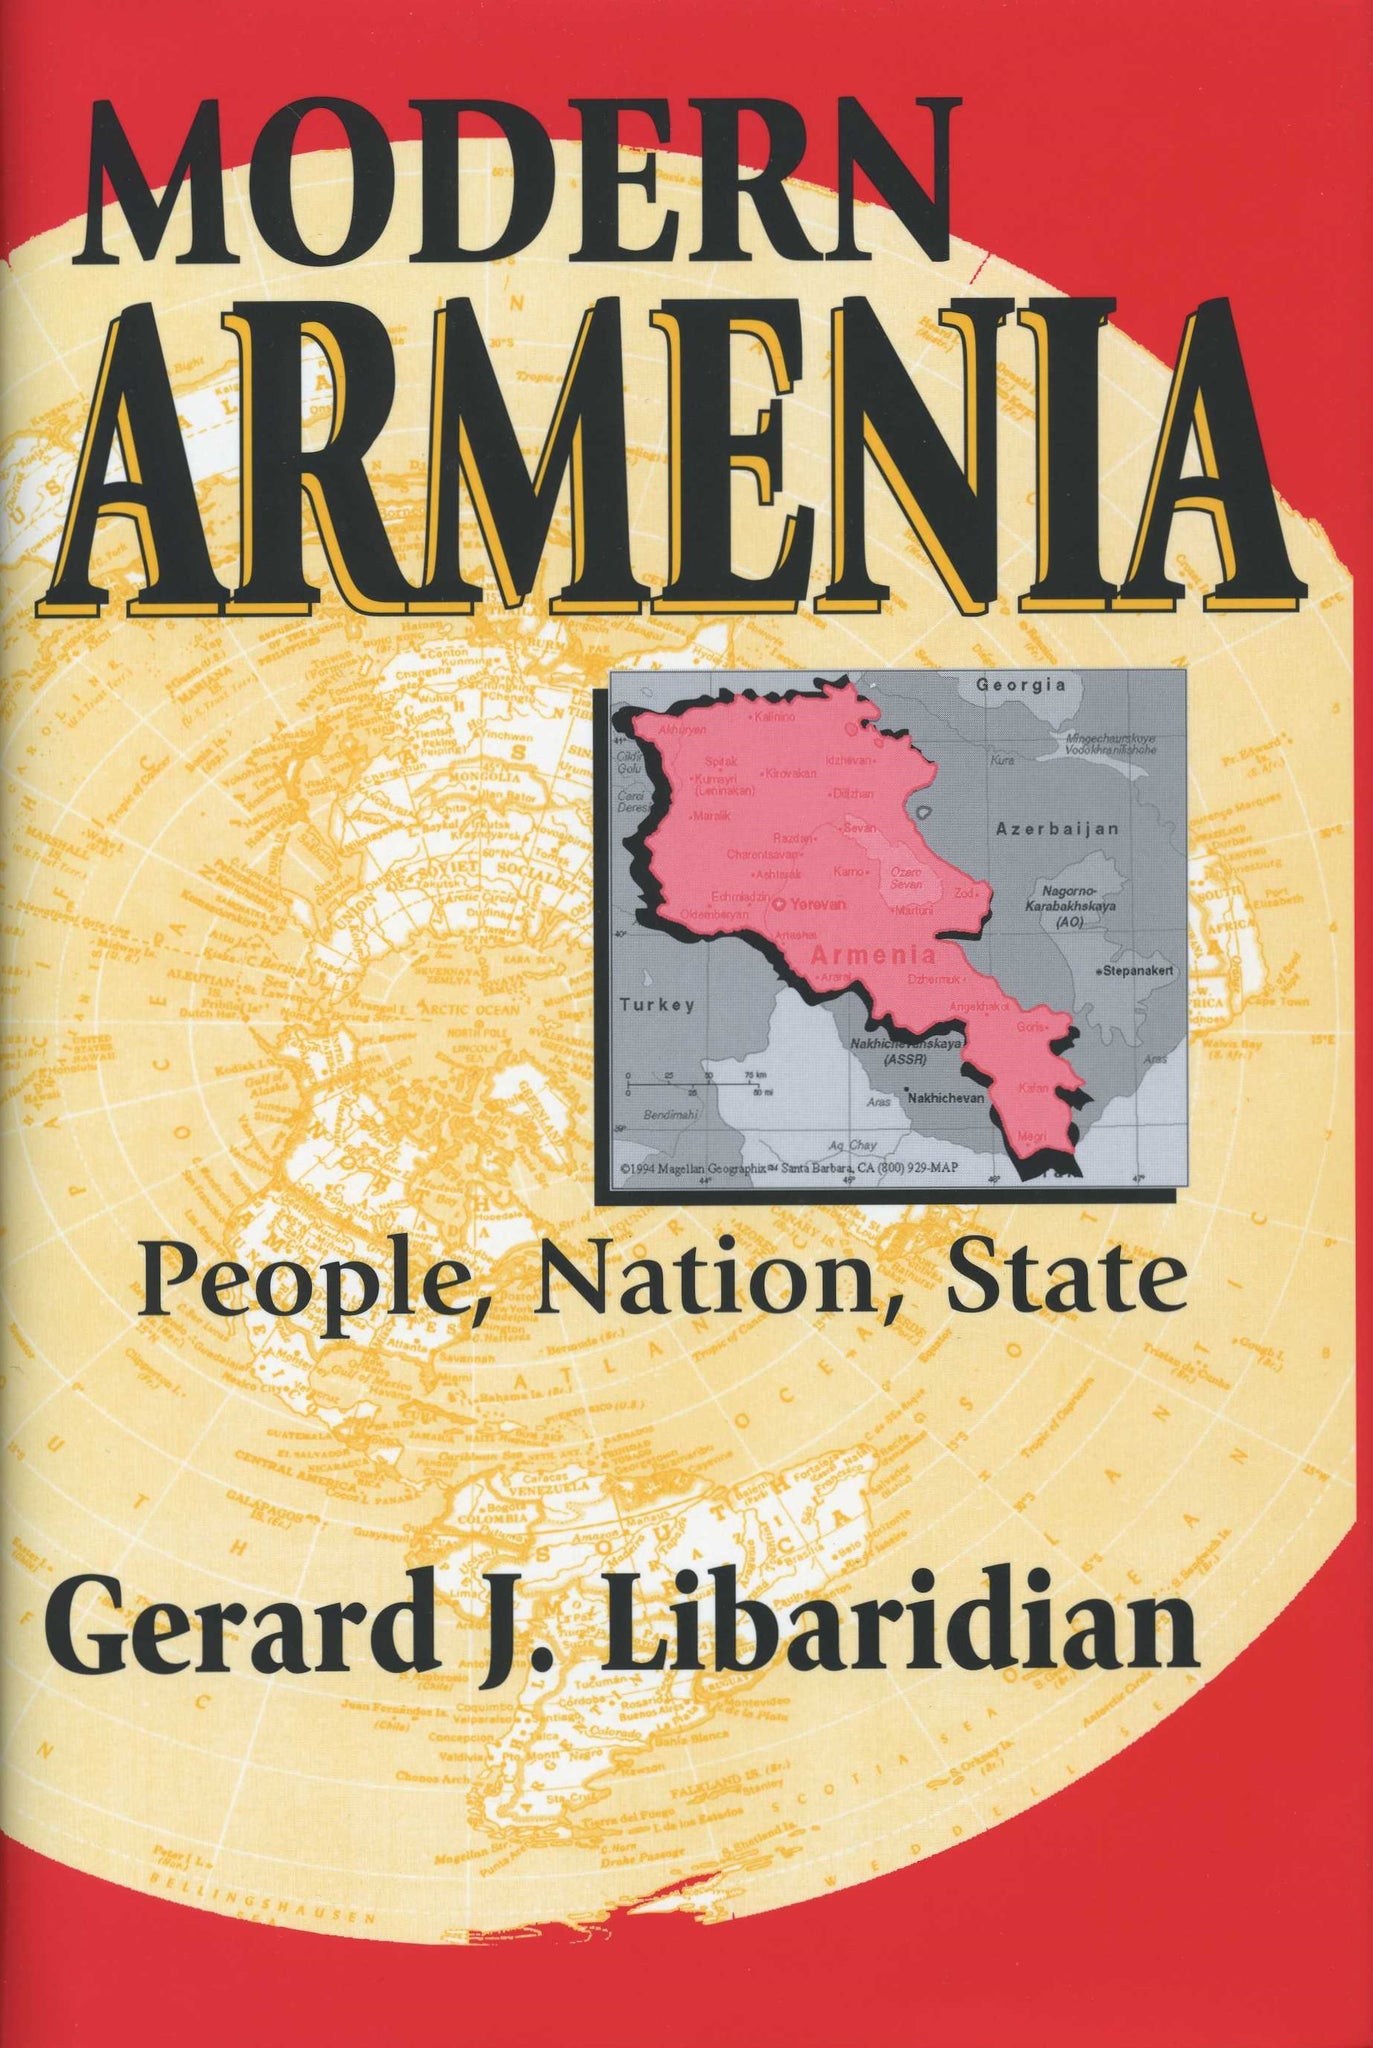 MODERN ARMENIA: People, Nation, State